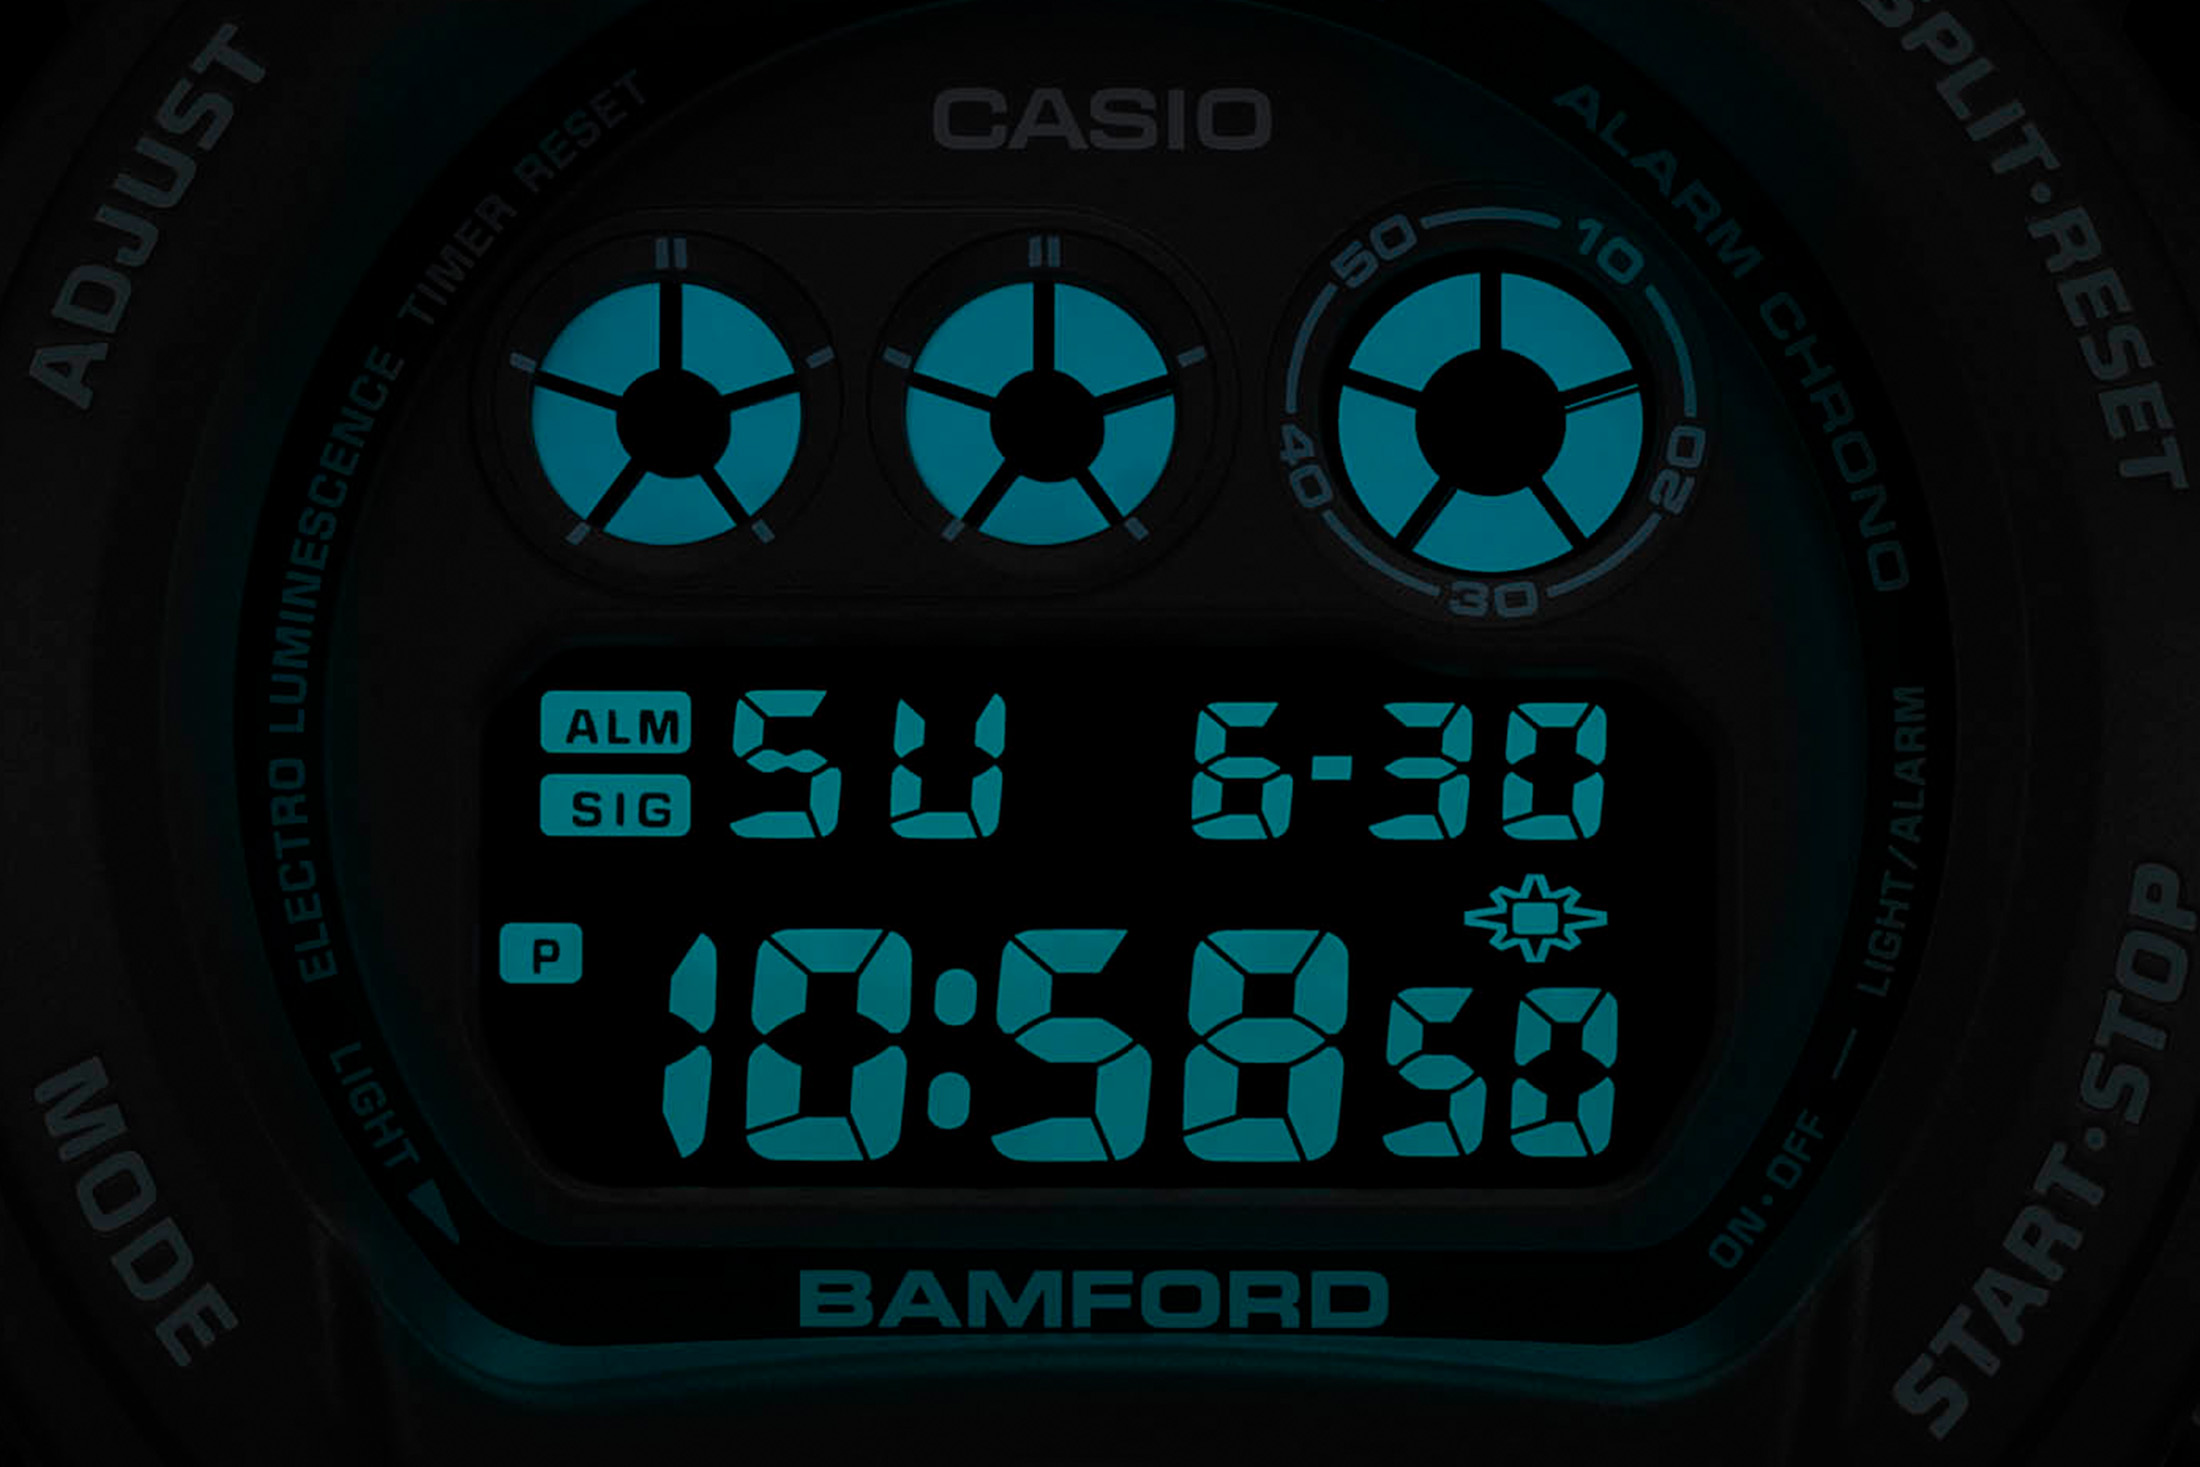 bamford g-shock コラボ - 腕時計(デジタル)